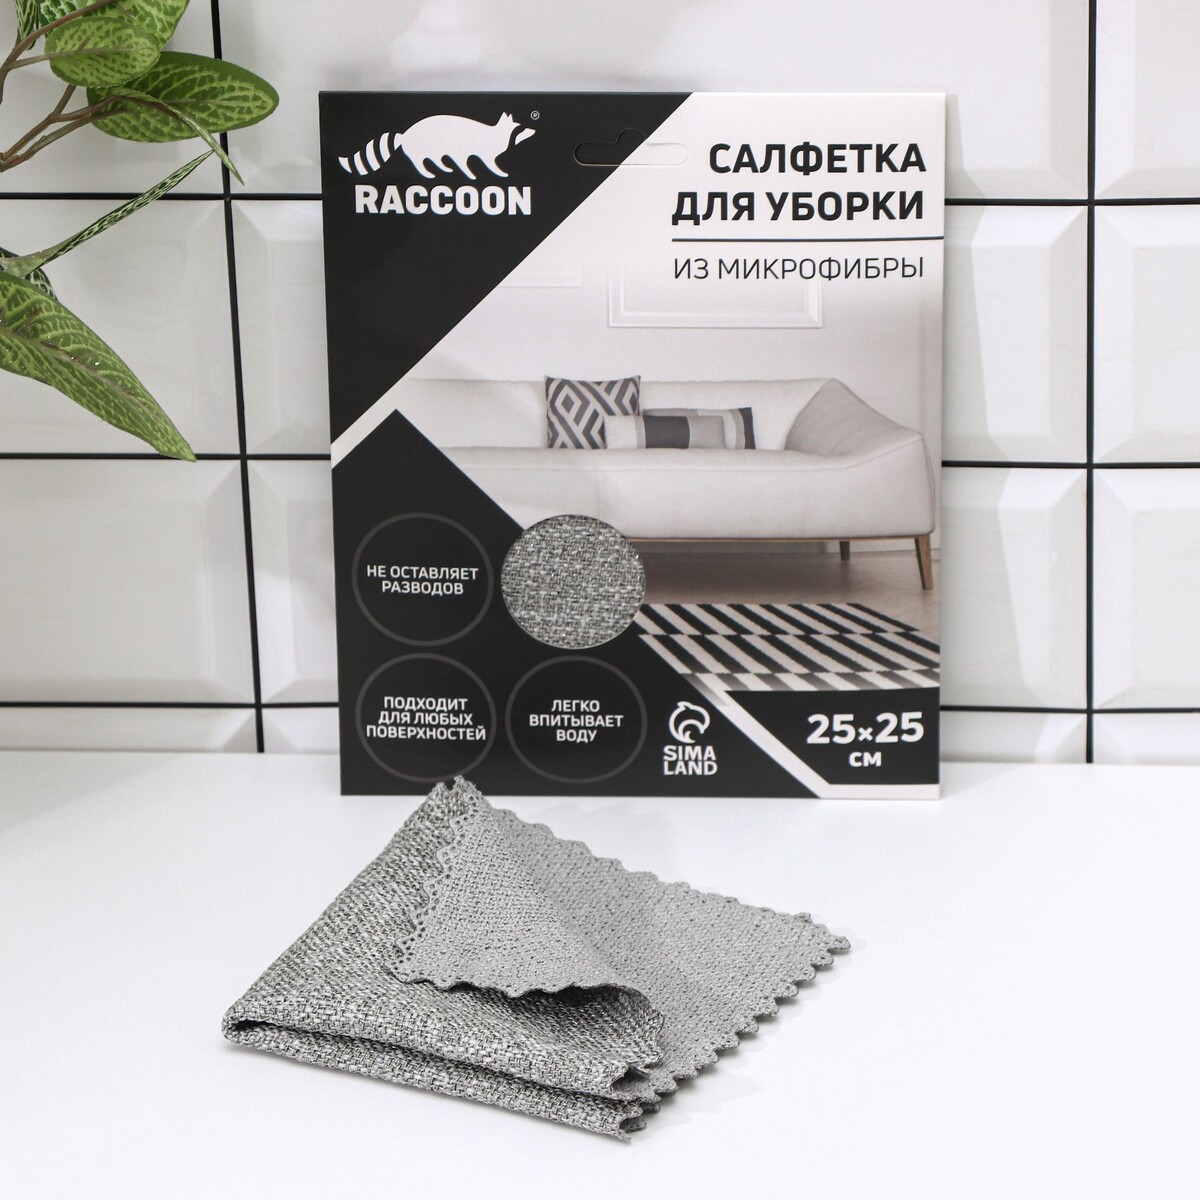 Салфетка микрофибра raccoon салфетка бытовая для уборки микрофибра 30 х 30 см 2 шт марья искусница ral 6027